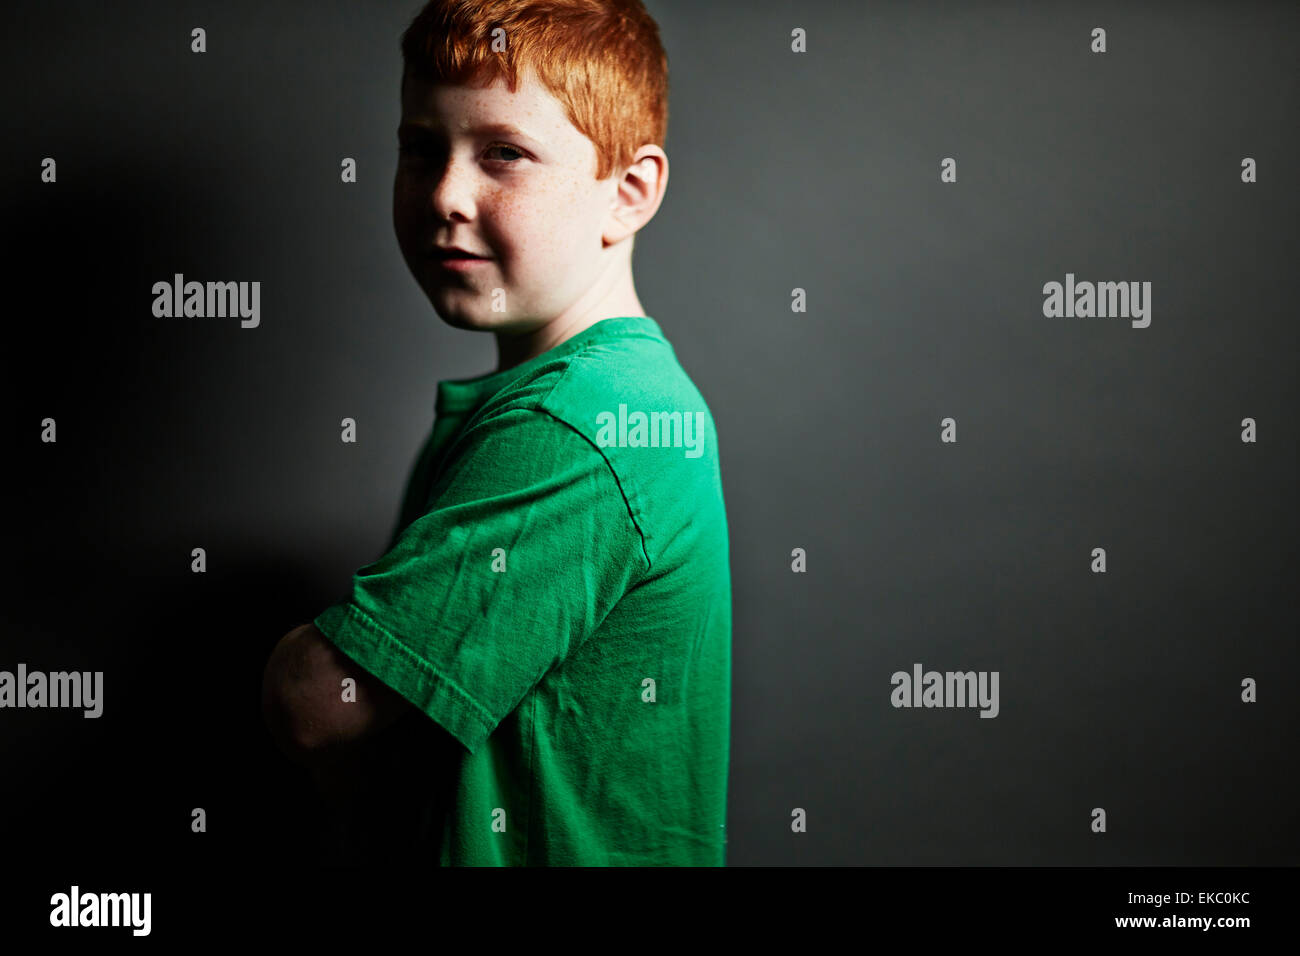 Boy wearing green t shirt Banque D'Images